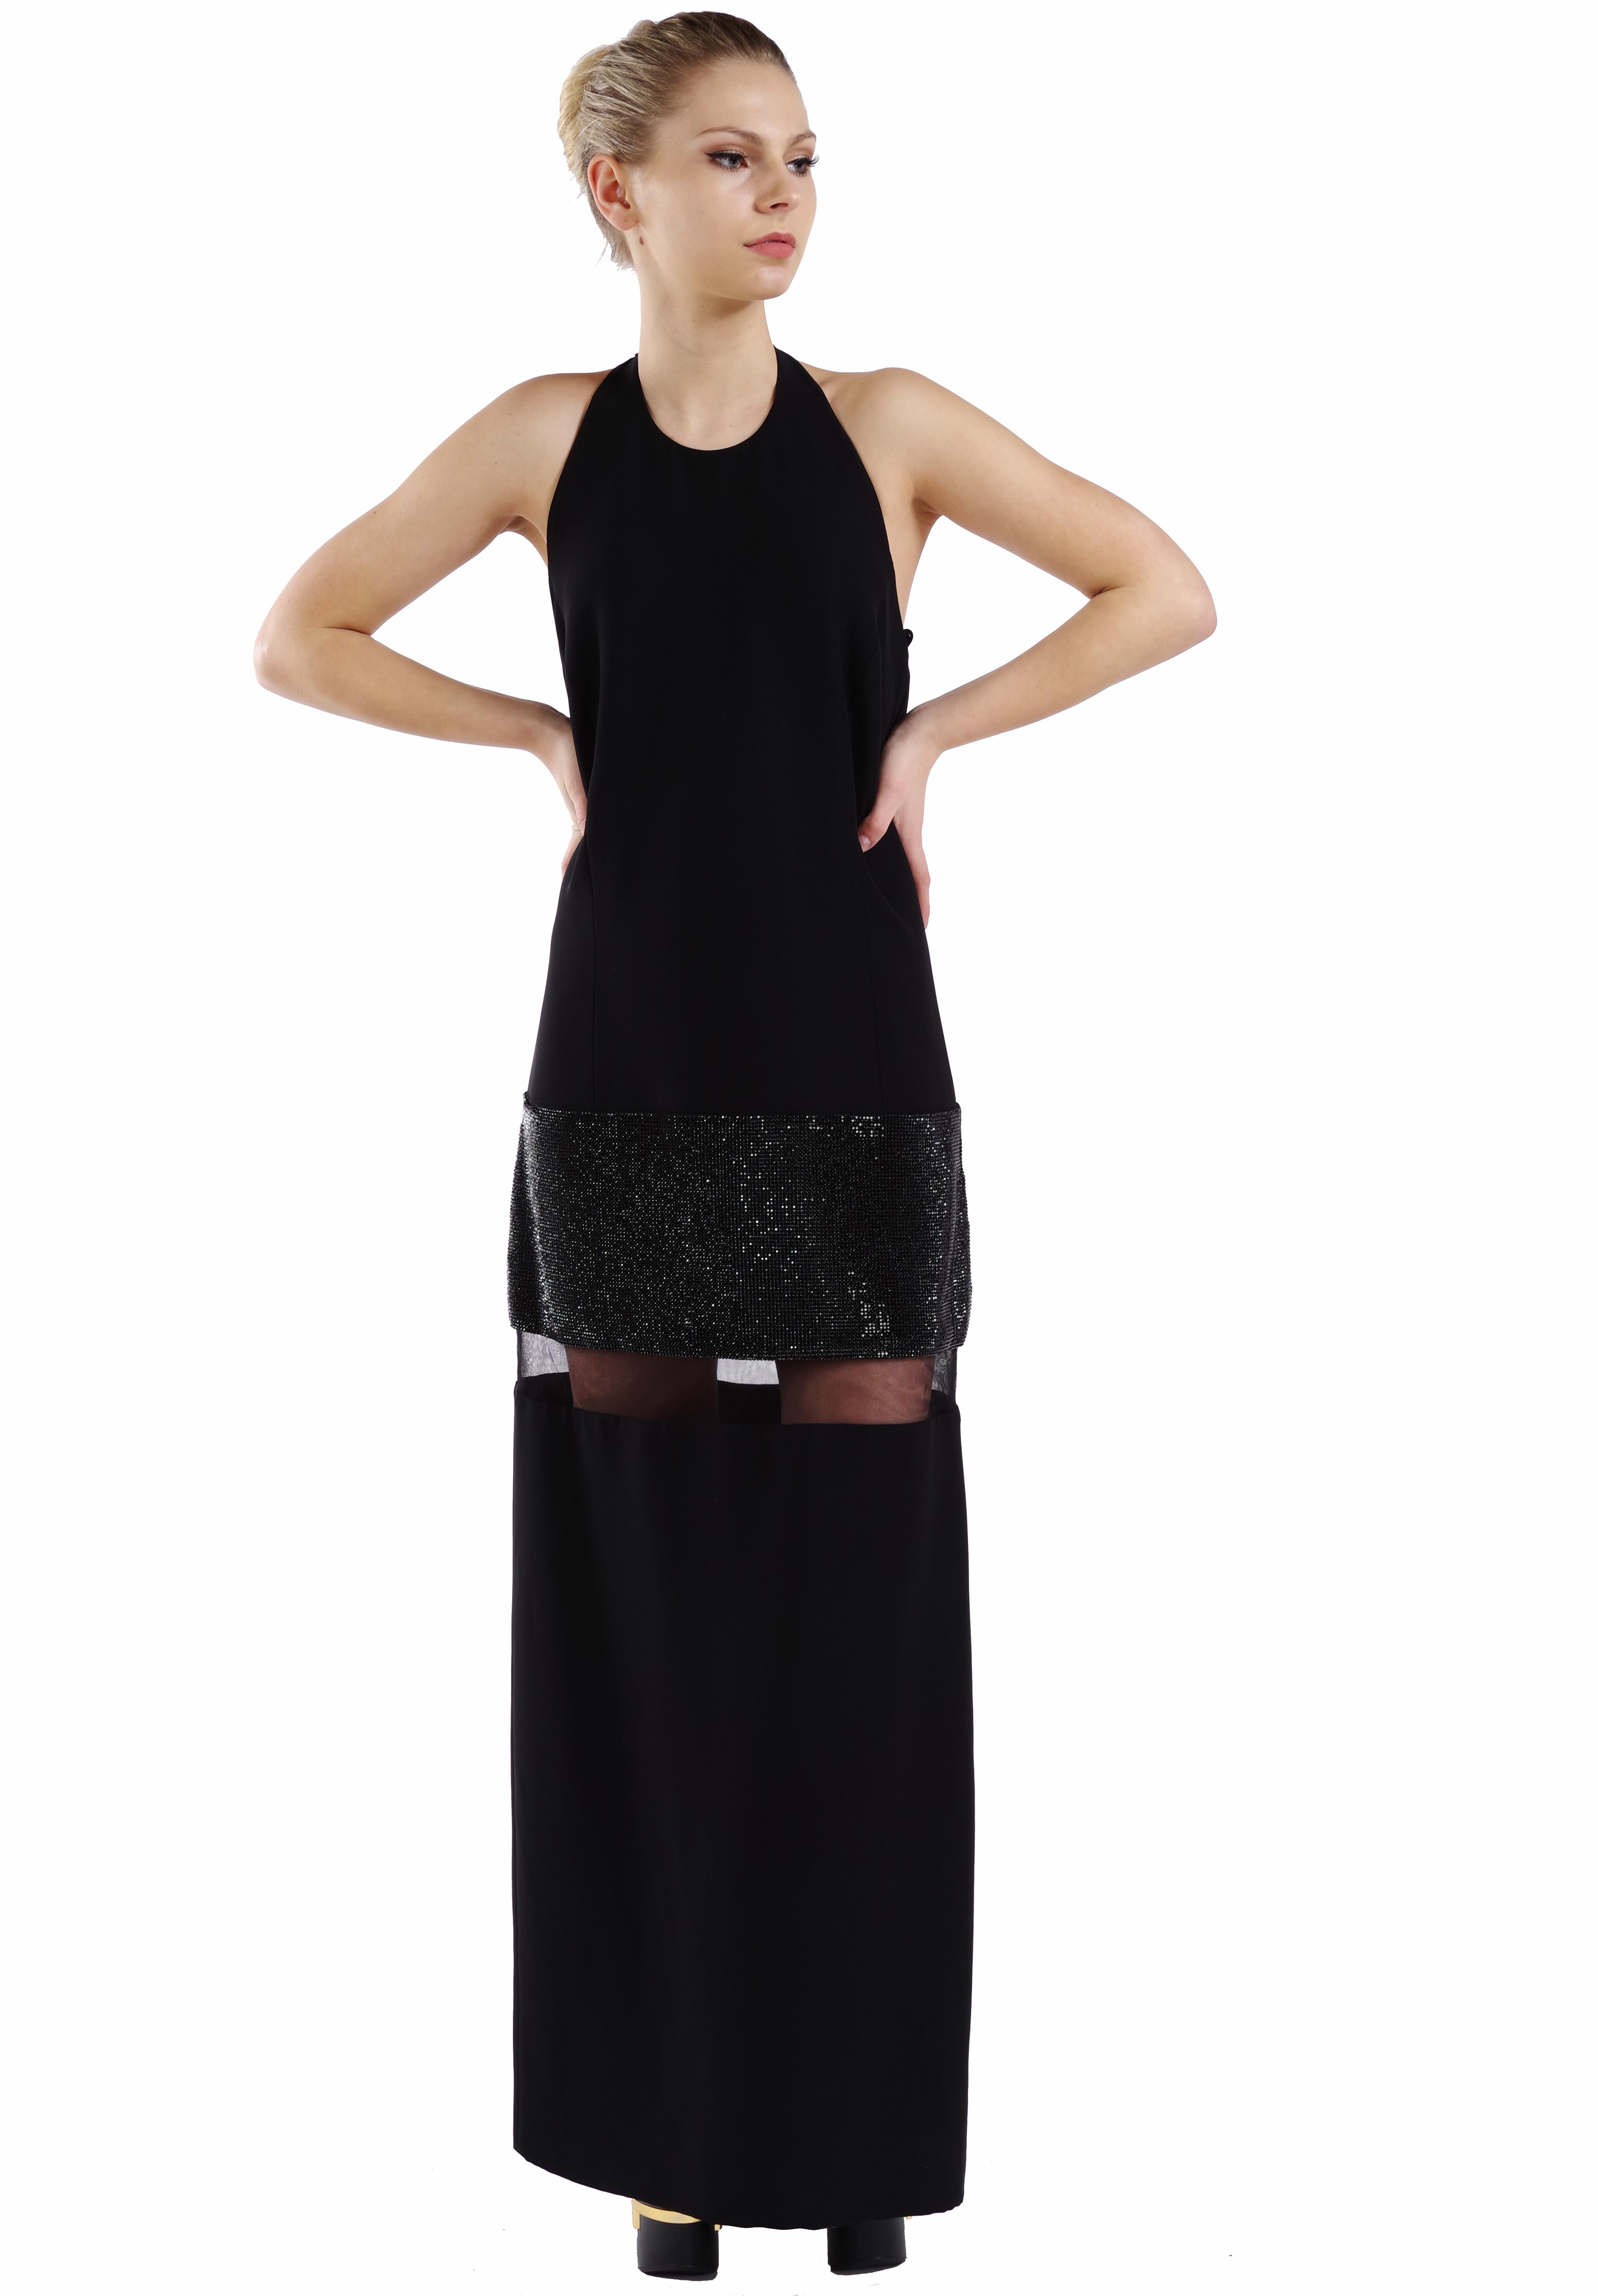 Black S/S 2015 look # 42 NEW VERSACE CRYSTAL MESH MBELLISHED BLACK LONG DRESS  42 - 6 For Sale